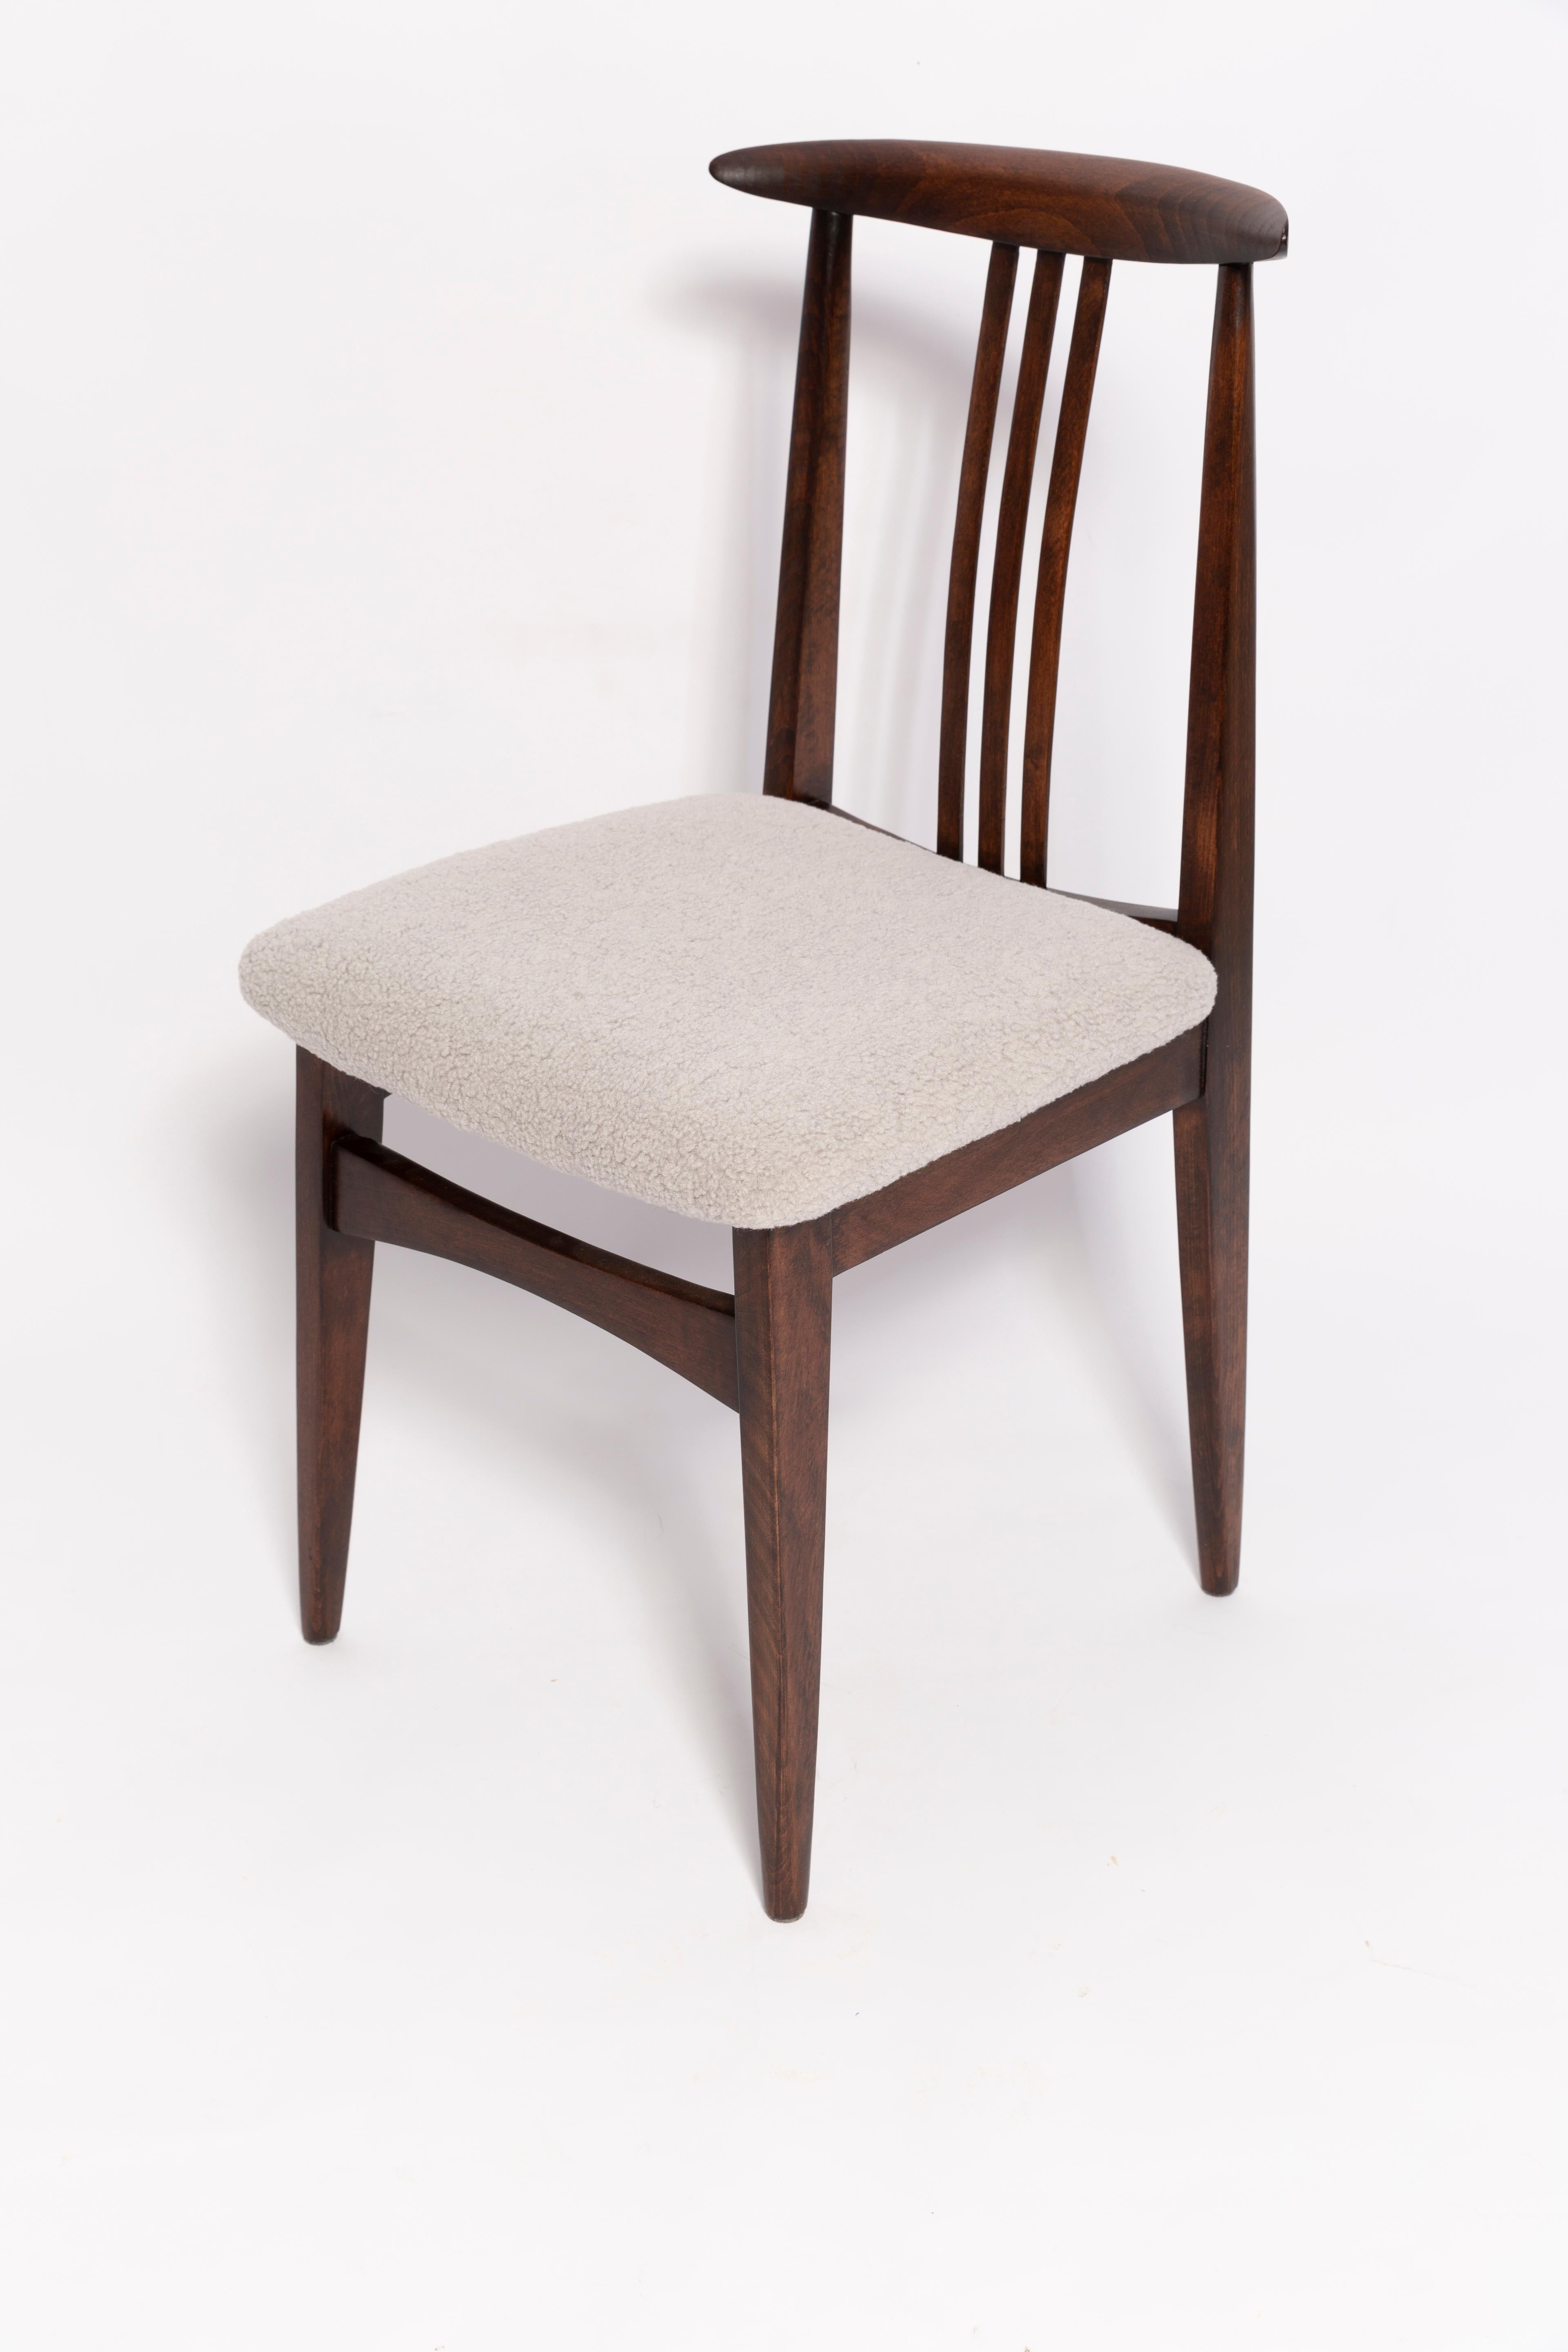 Set of Ten Mid-Century Linen Boucle Chairs, Walnut, M. Zielinski, Europe, 1960s For Sale 1